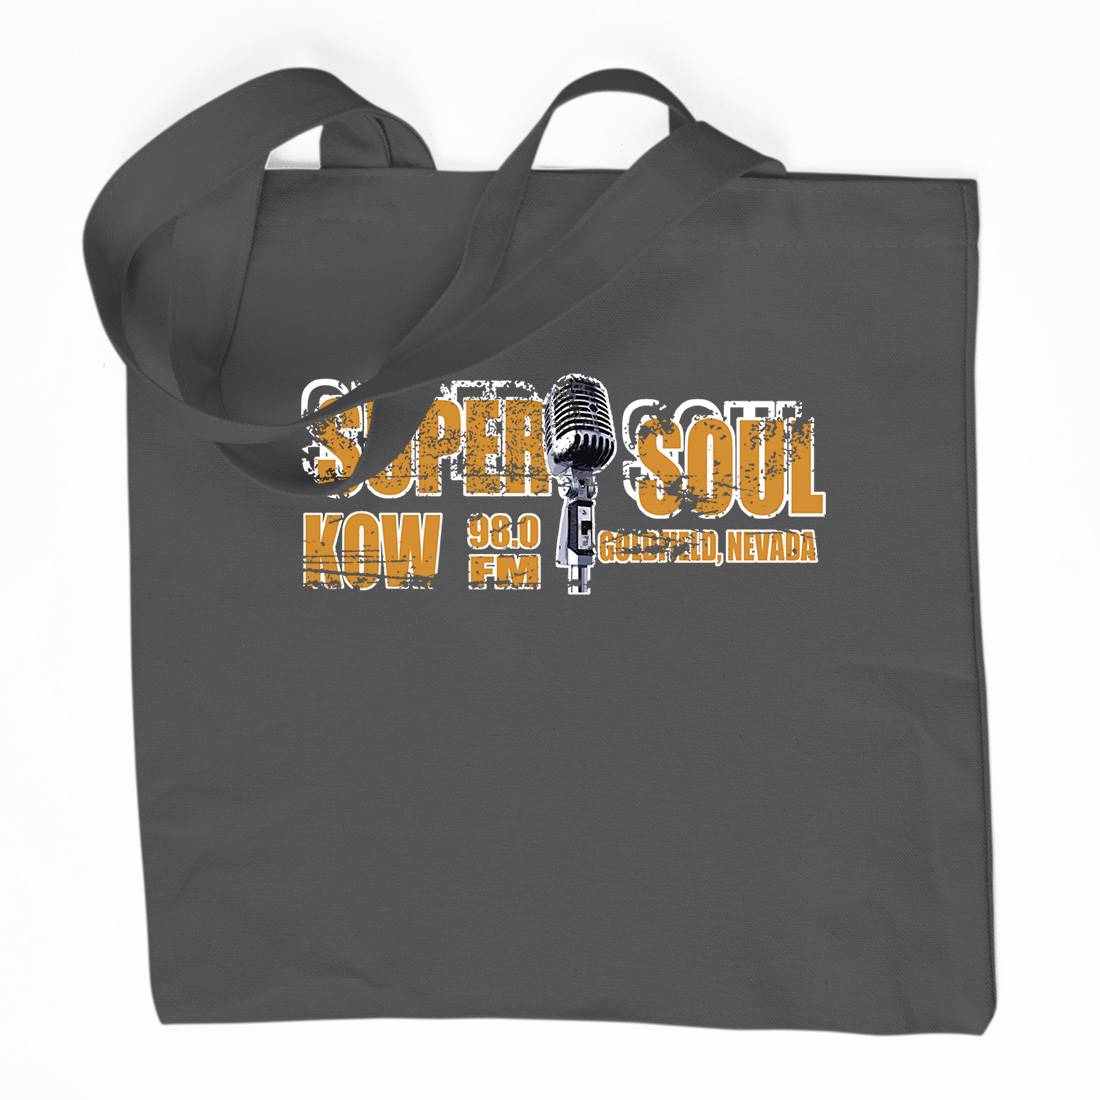 Super Soul Organic Premium Cotton Tote Bag Music D392